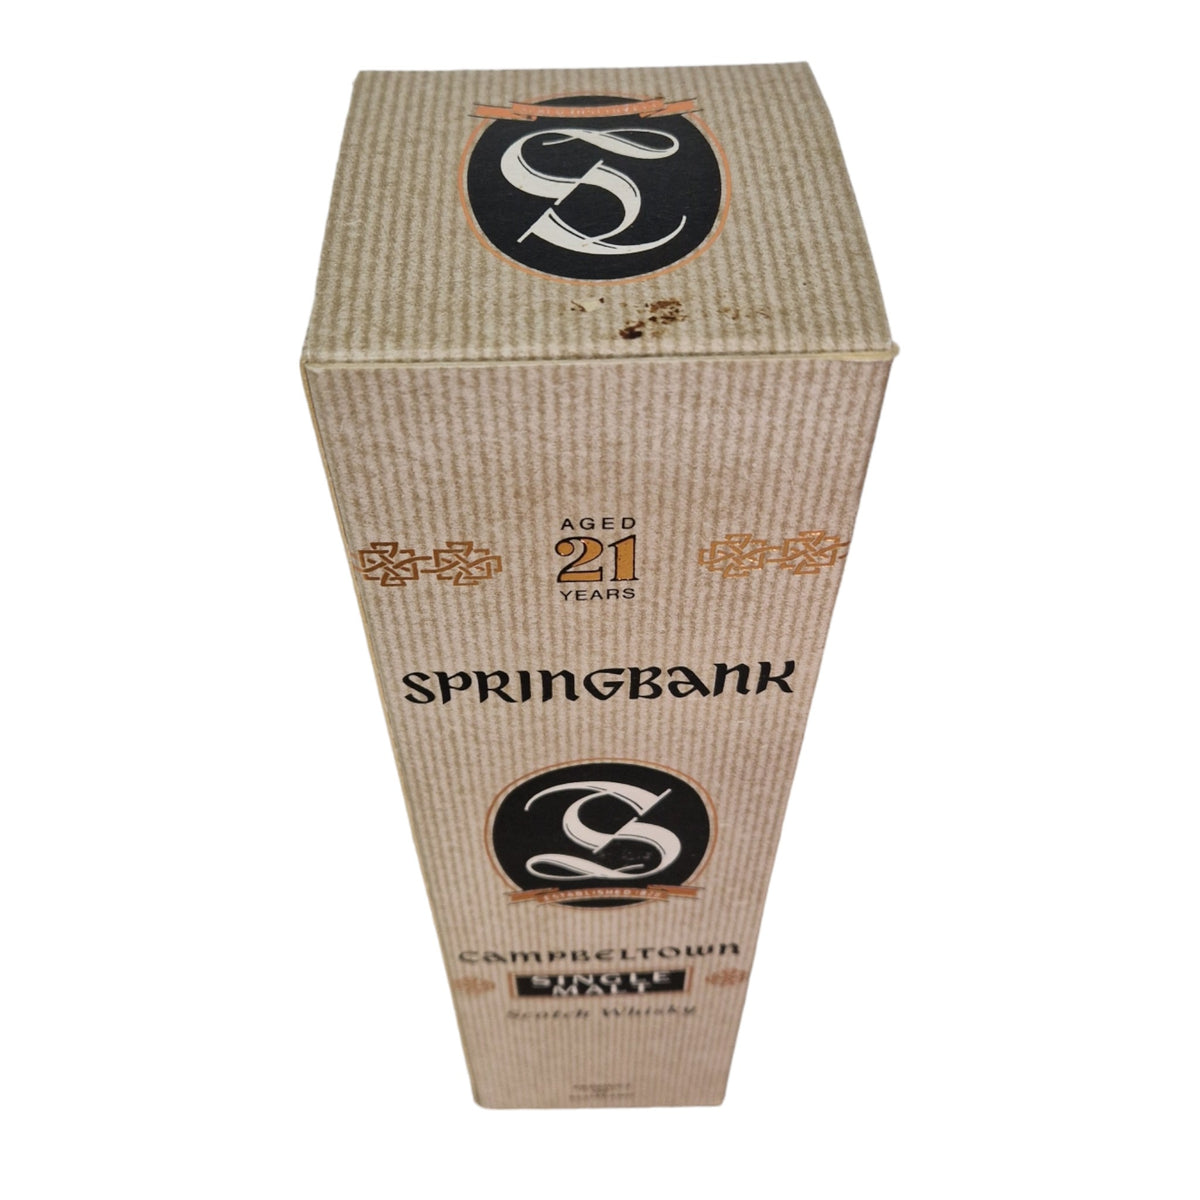 Springbank 21 Years Campbeltown Single Malt Scotch Whisky 0,7 L